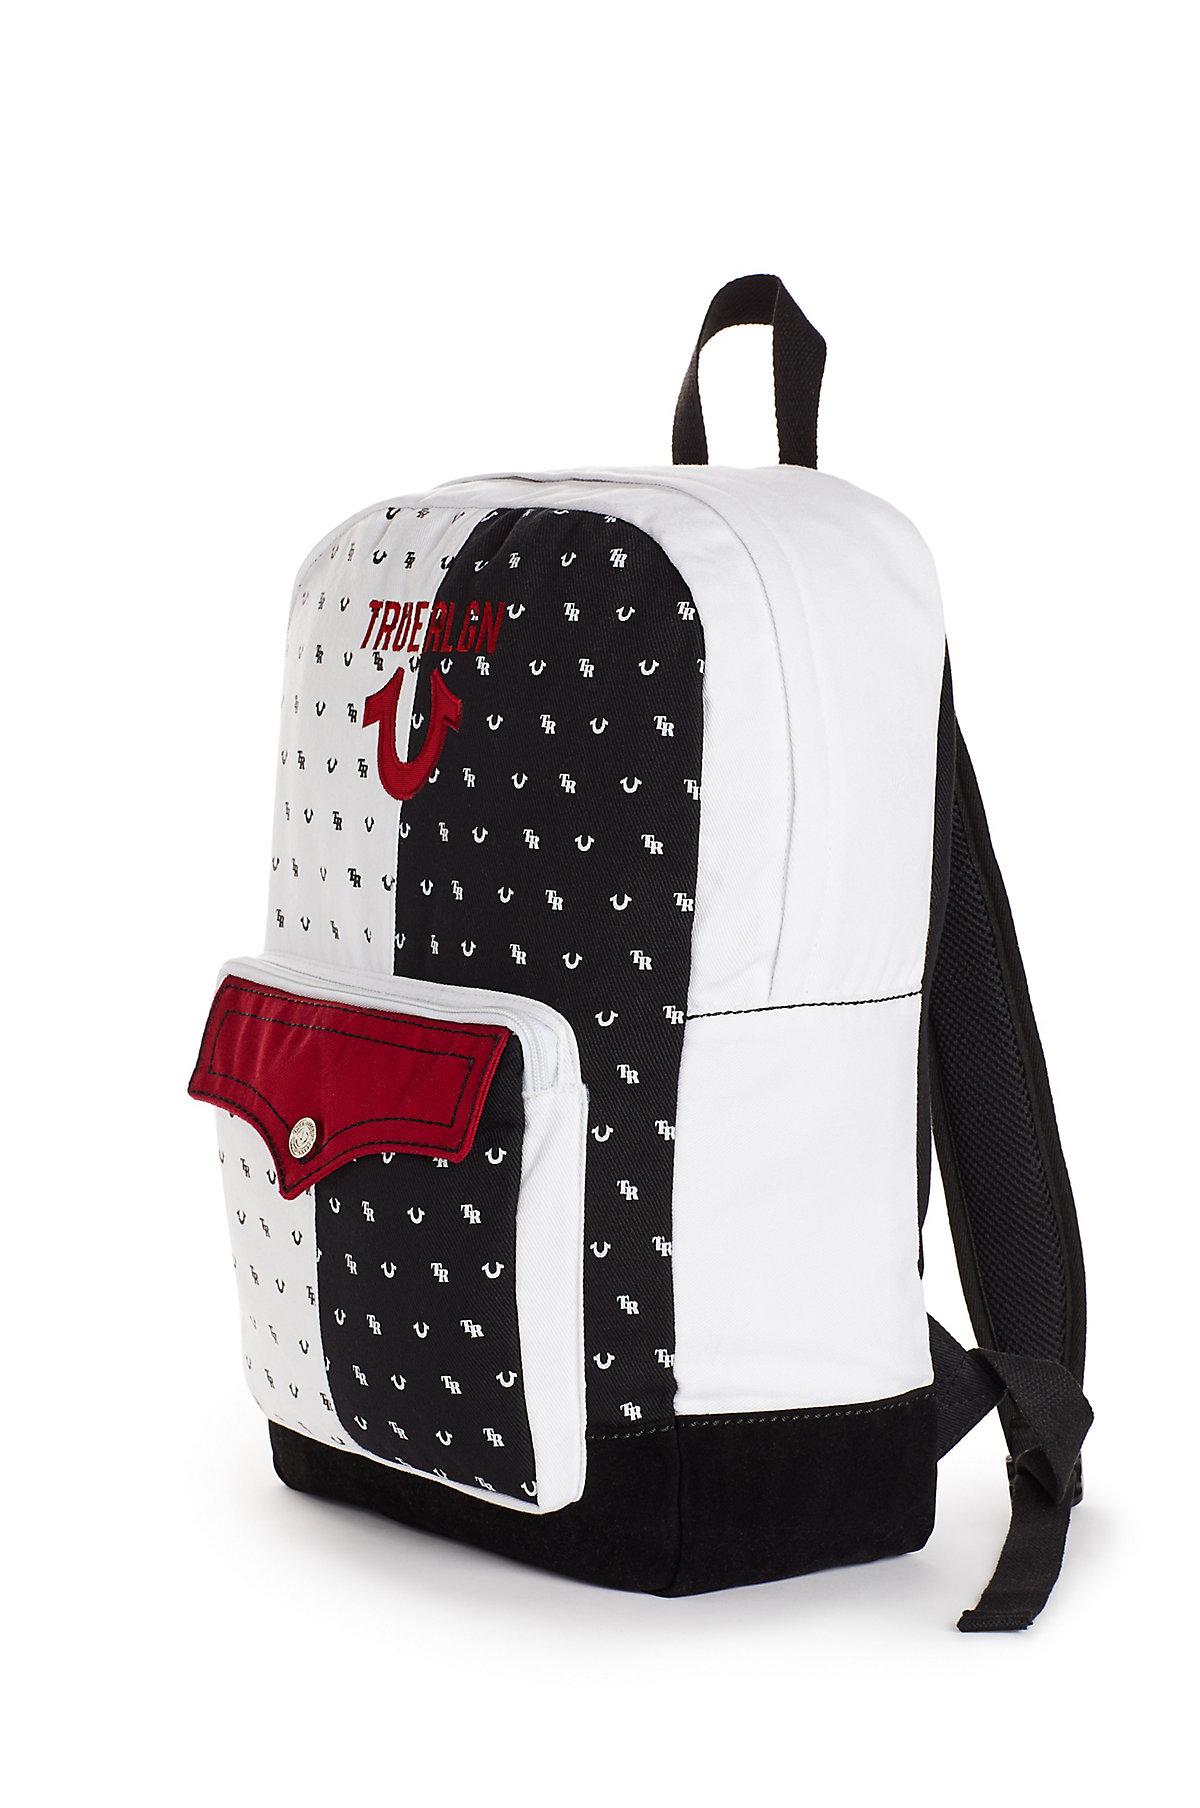 true religion backpack black and white